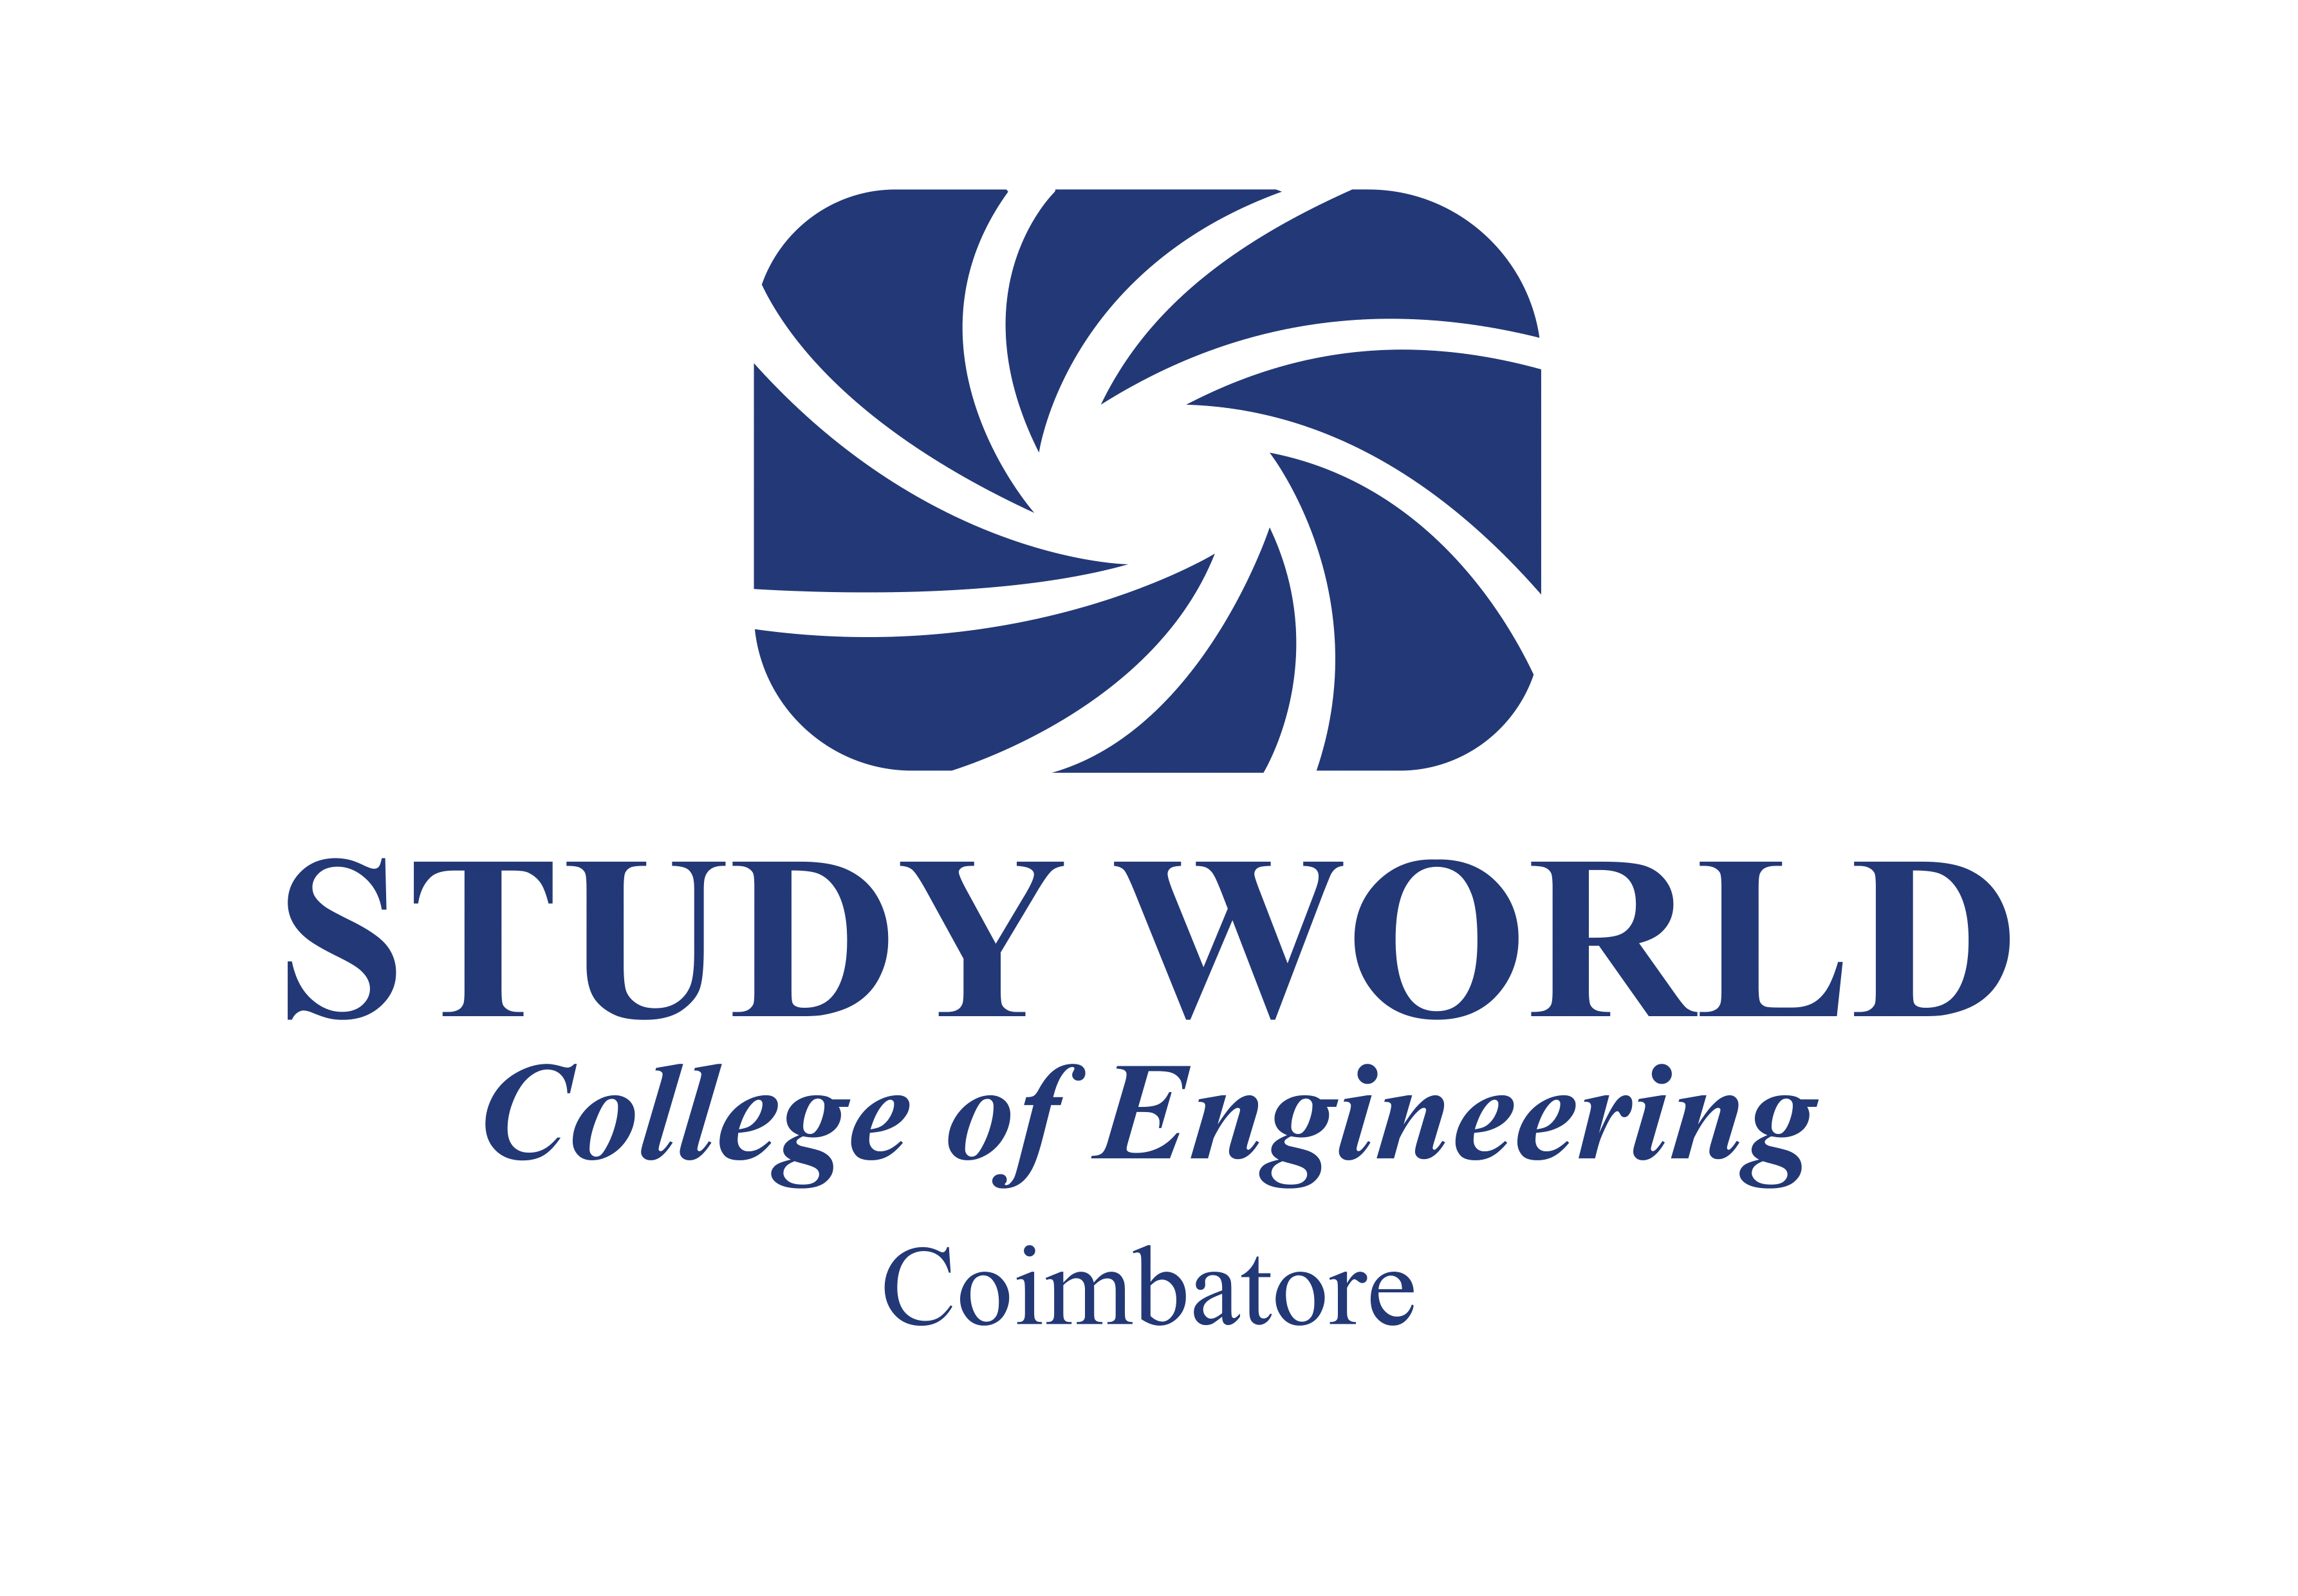 STUDY WORLD COLLEGE OF ENGINEERING